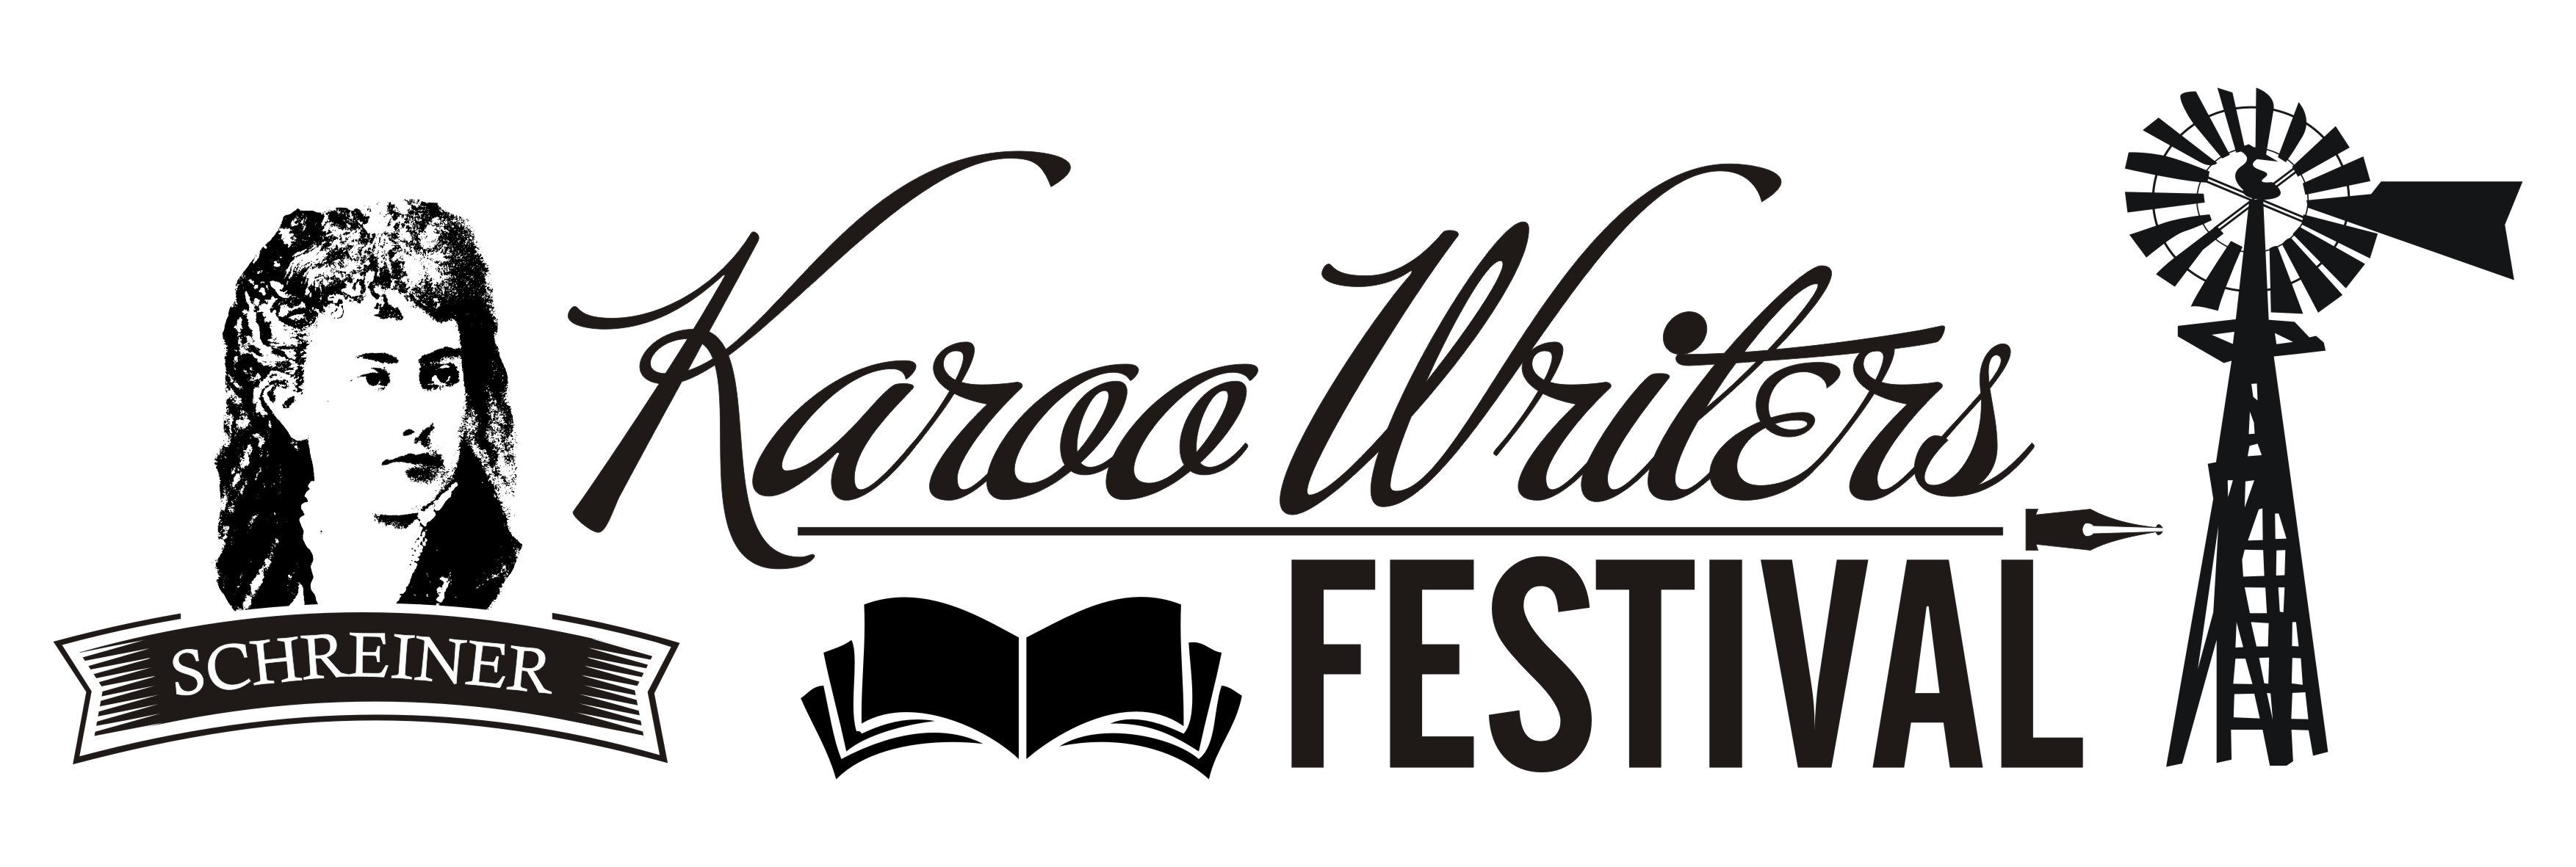 schreiner_karoo_writers_festival_logo.jpg